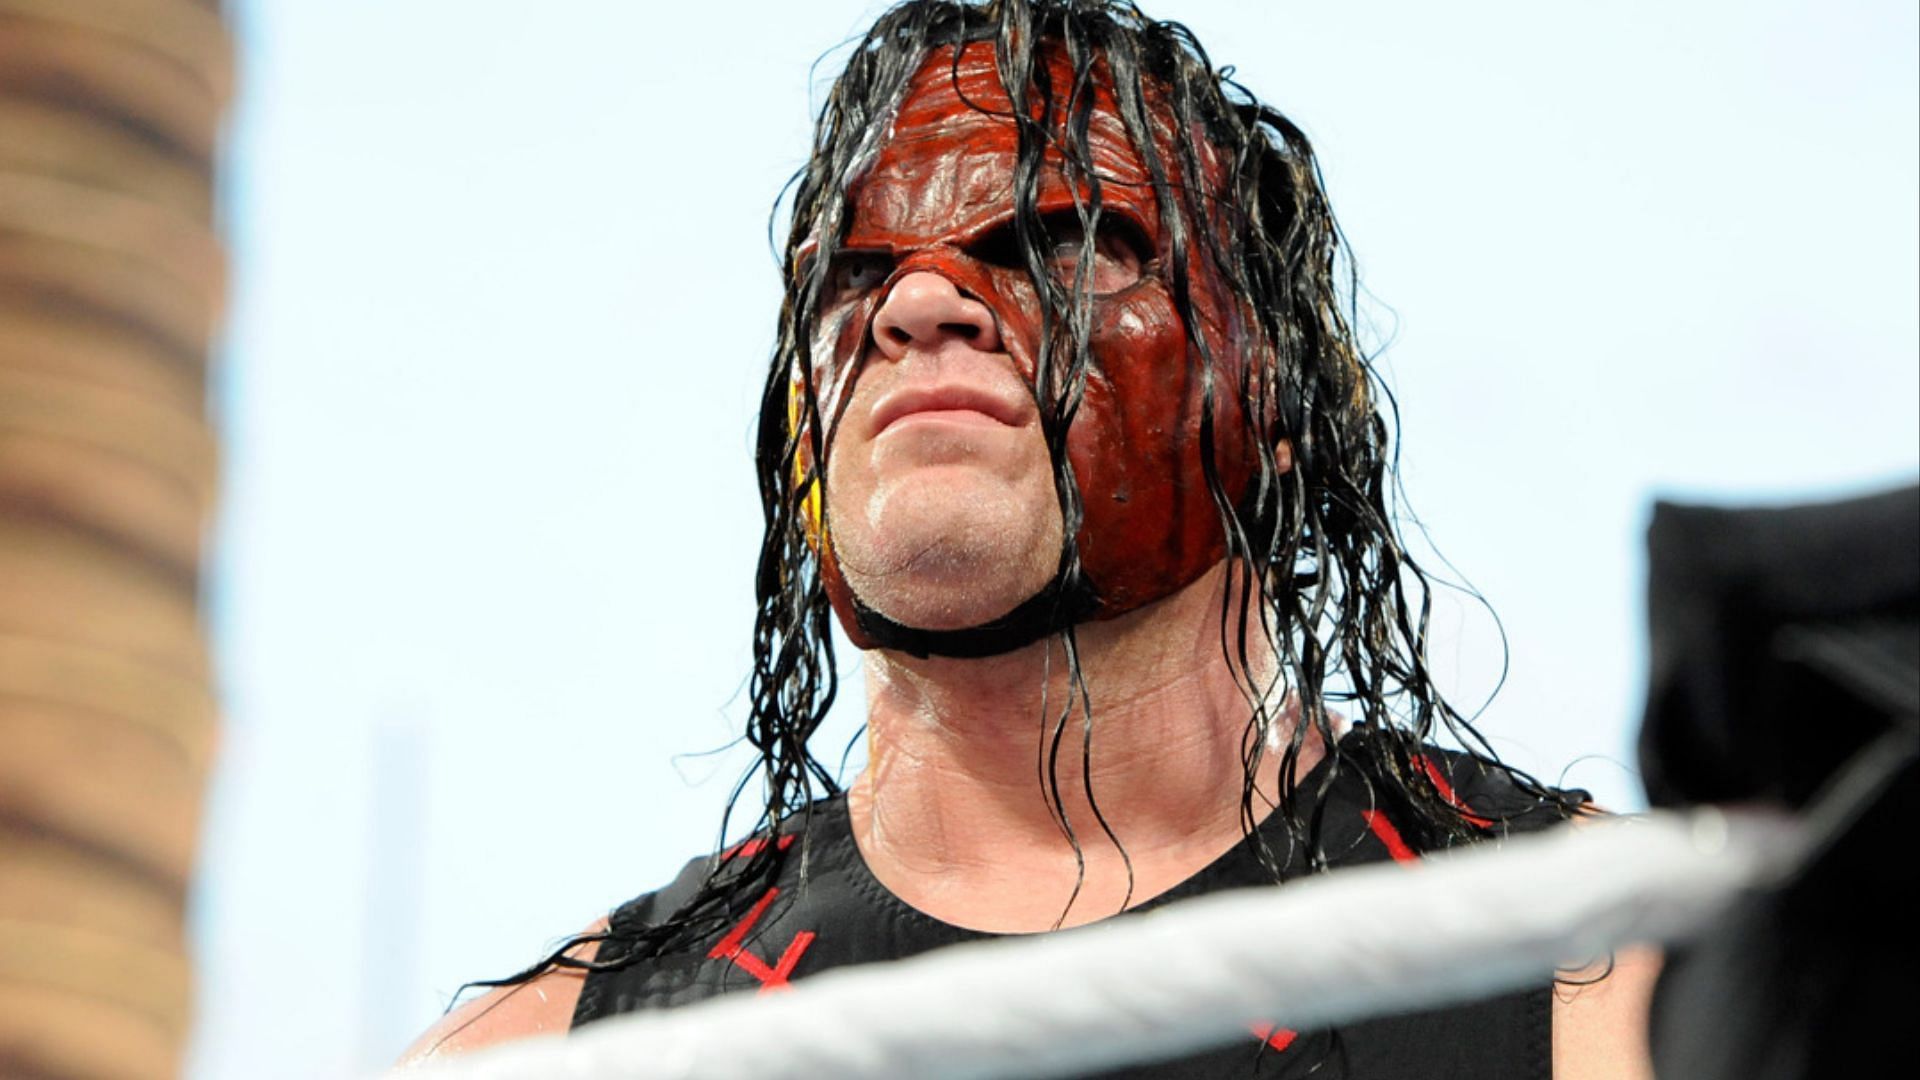 Hall of Famer and former three-time WWE World Champion, Kane.